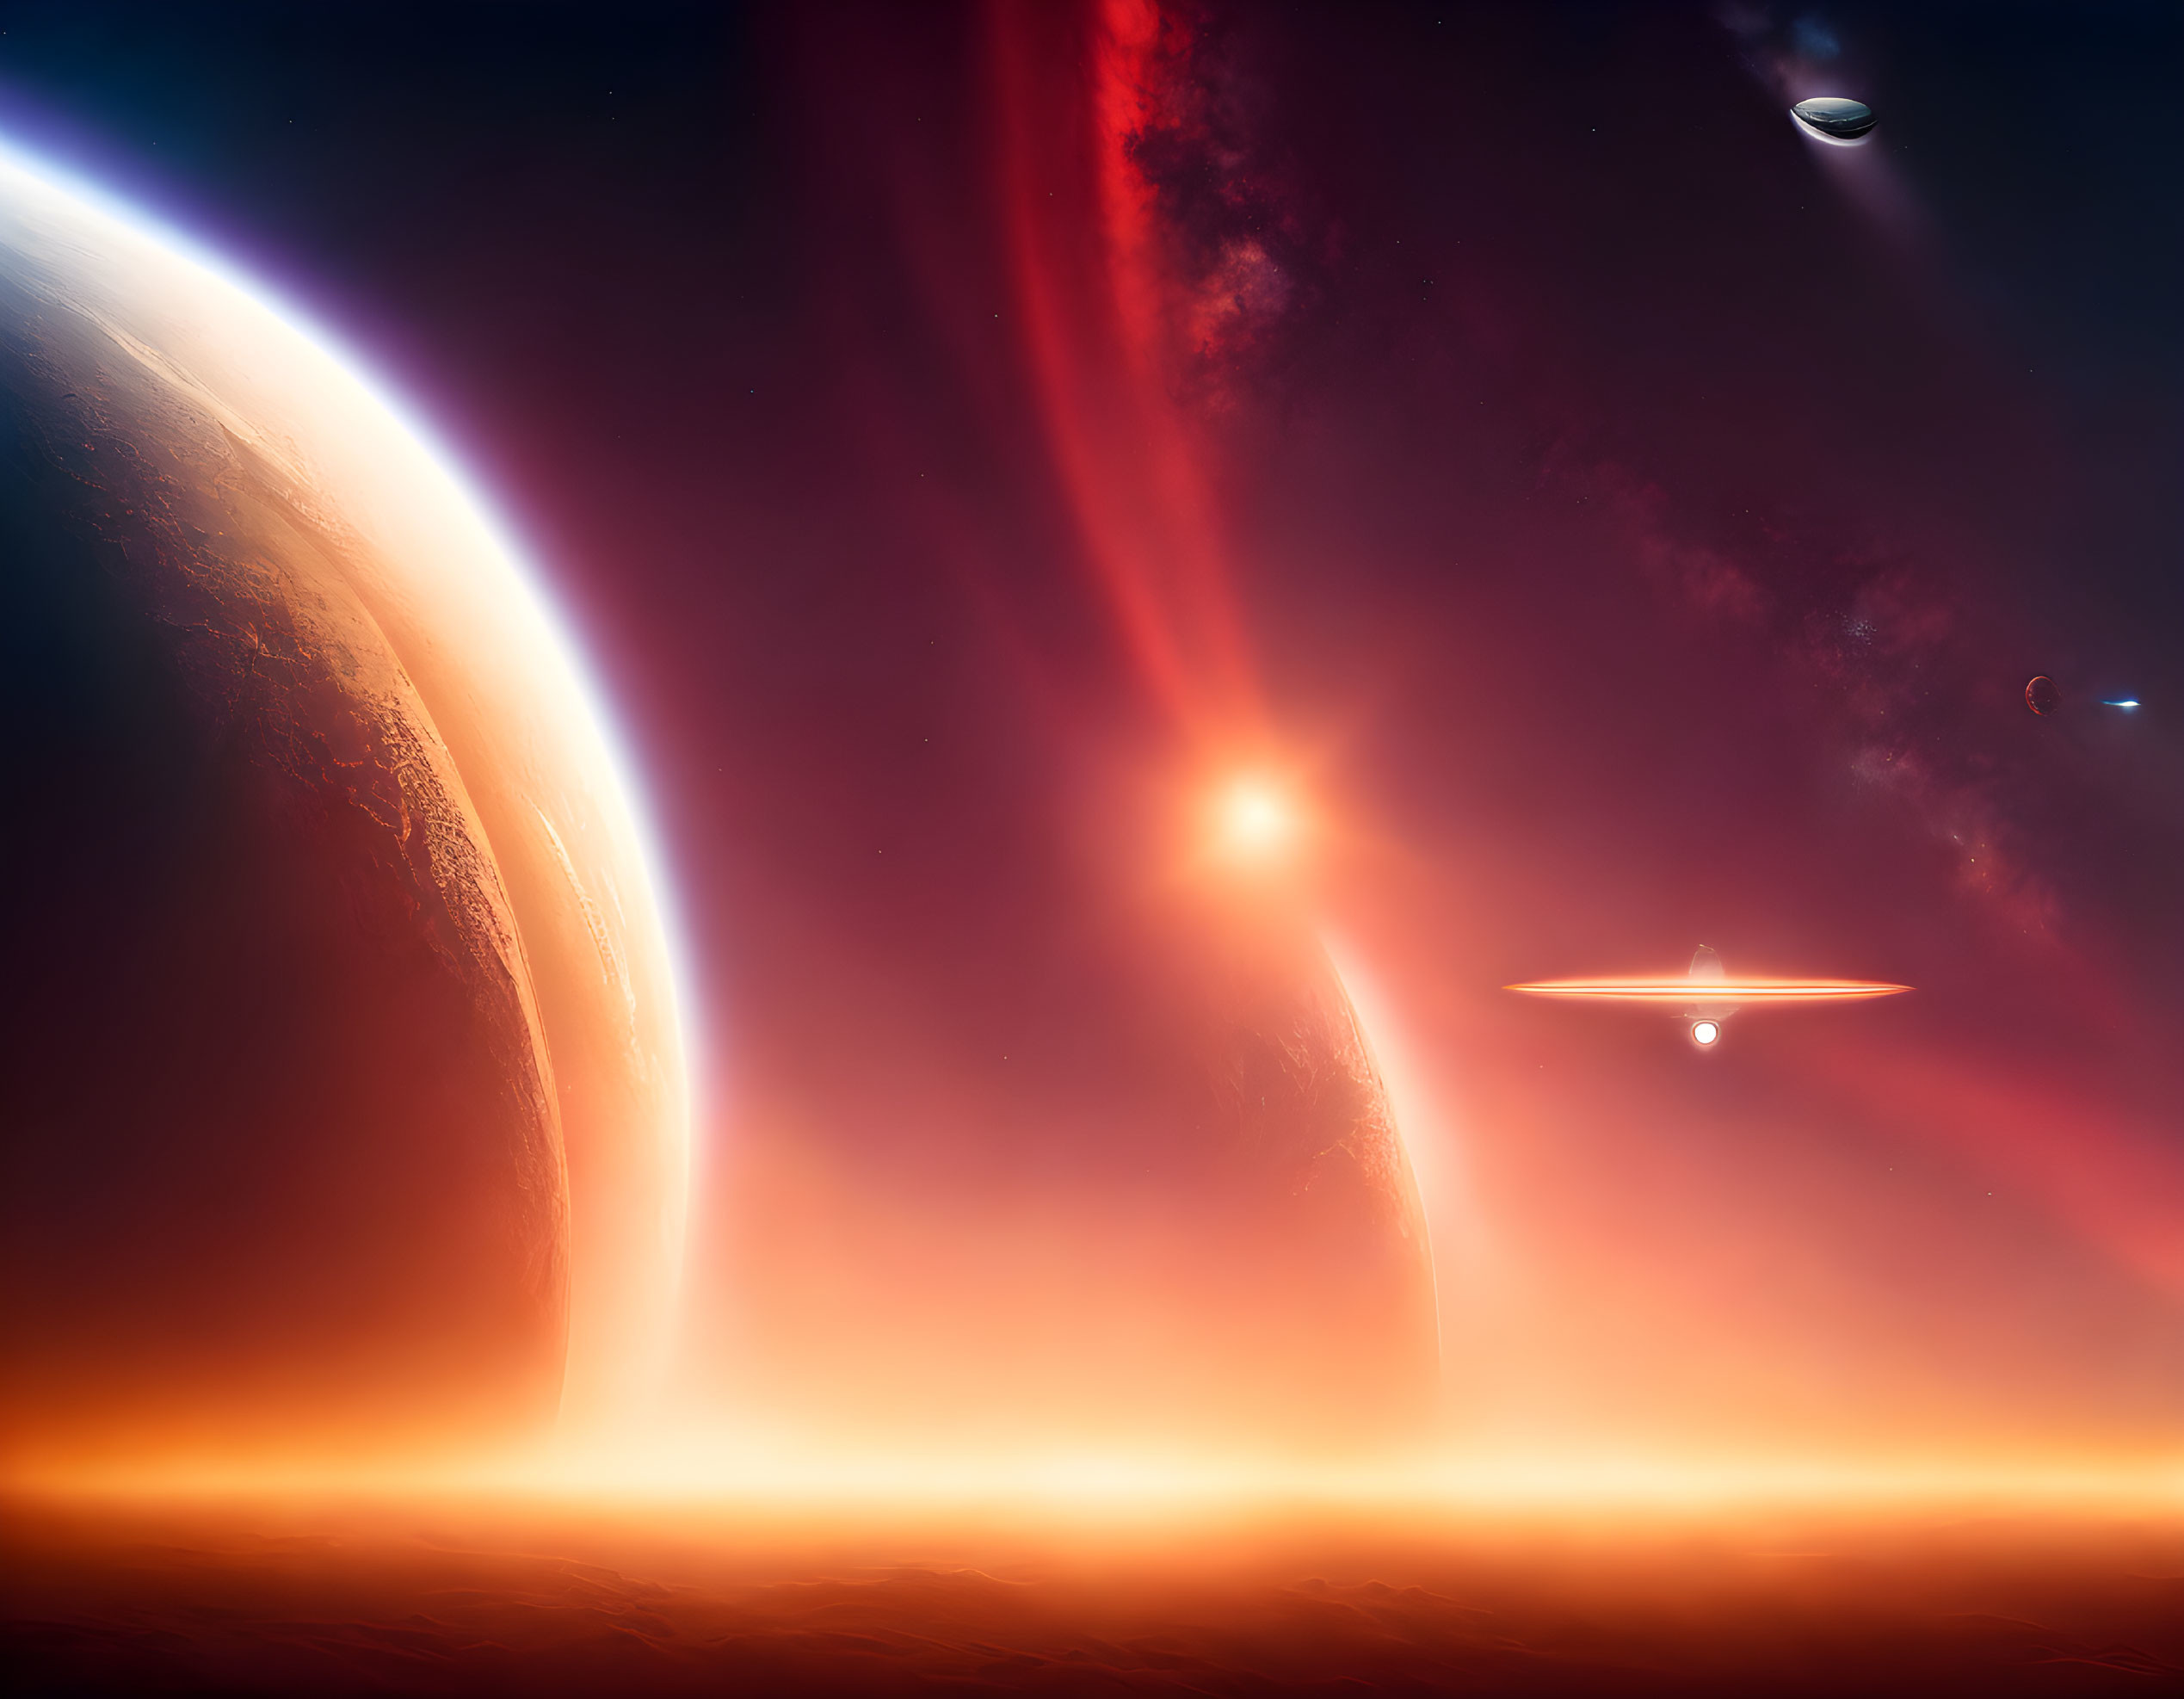 Illuminated planet and starburst in vibrant space scene